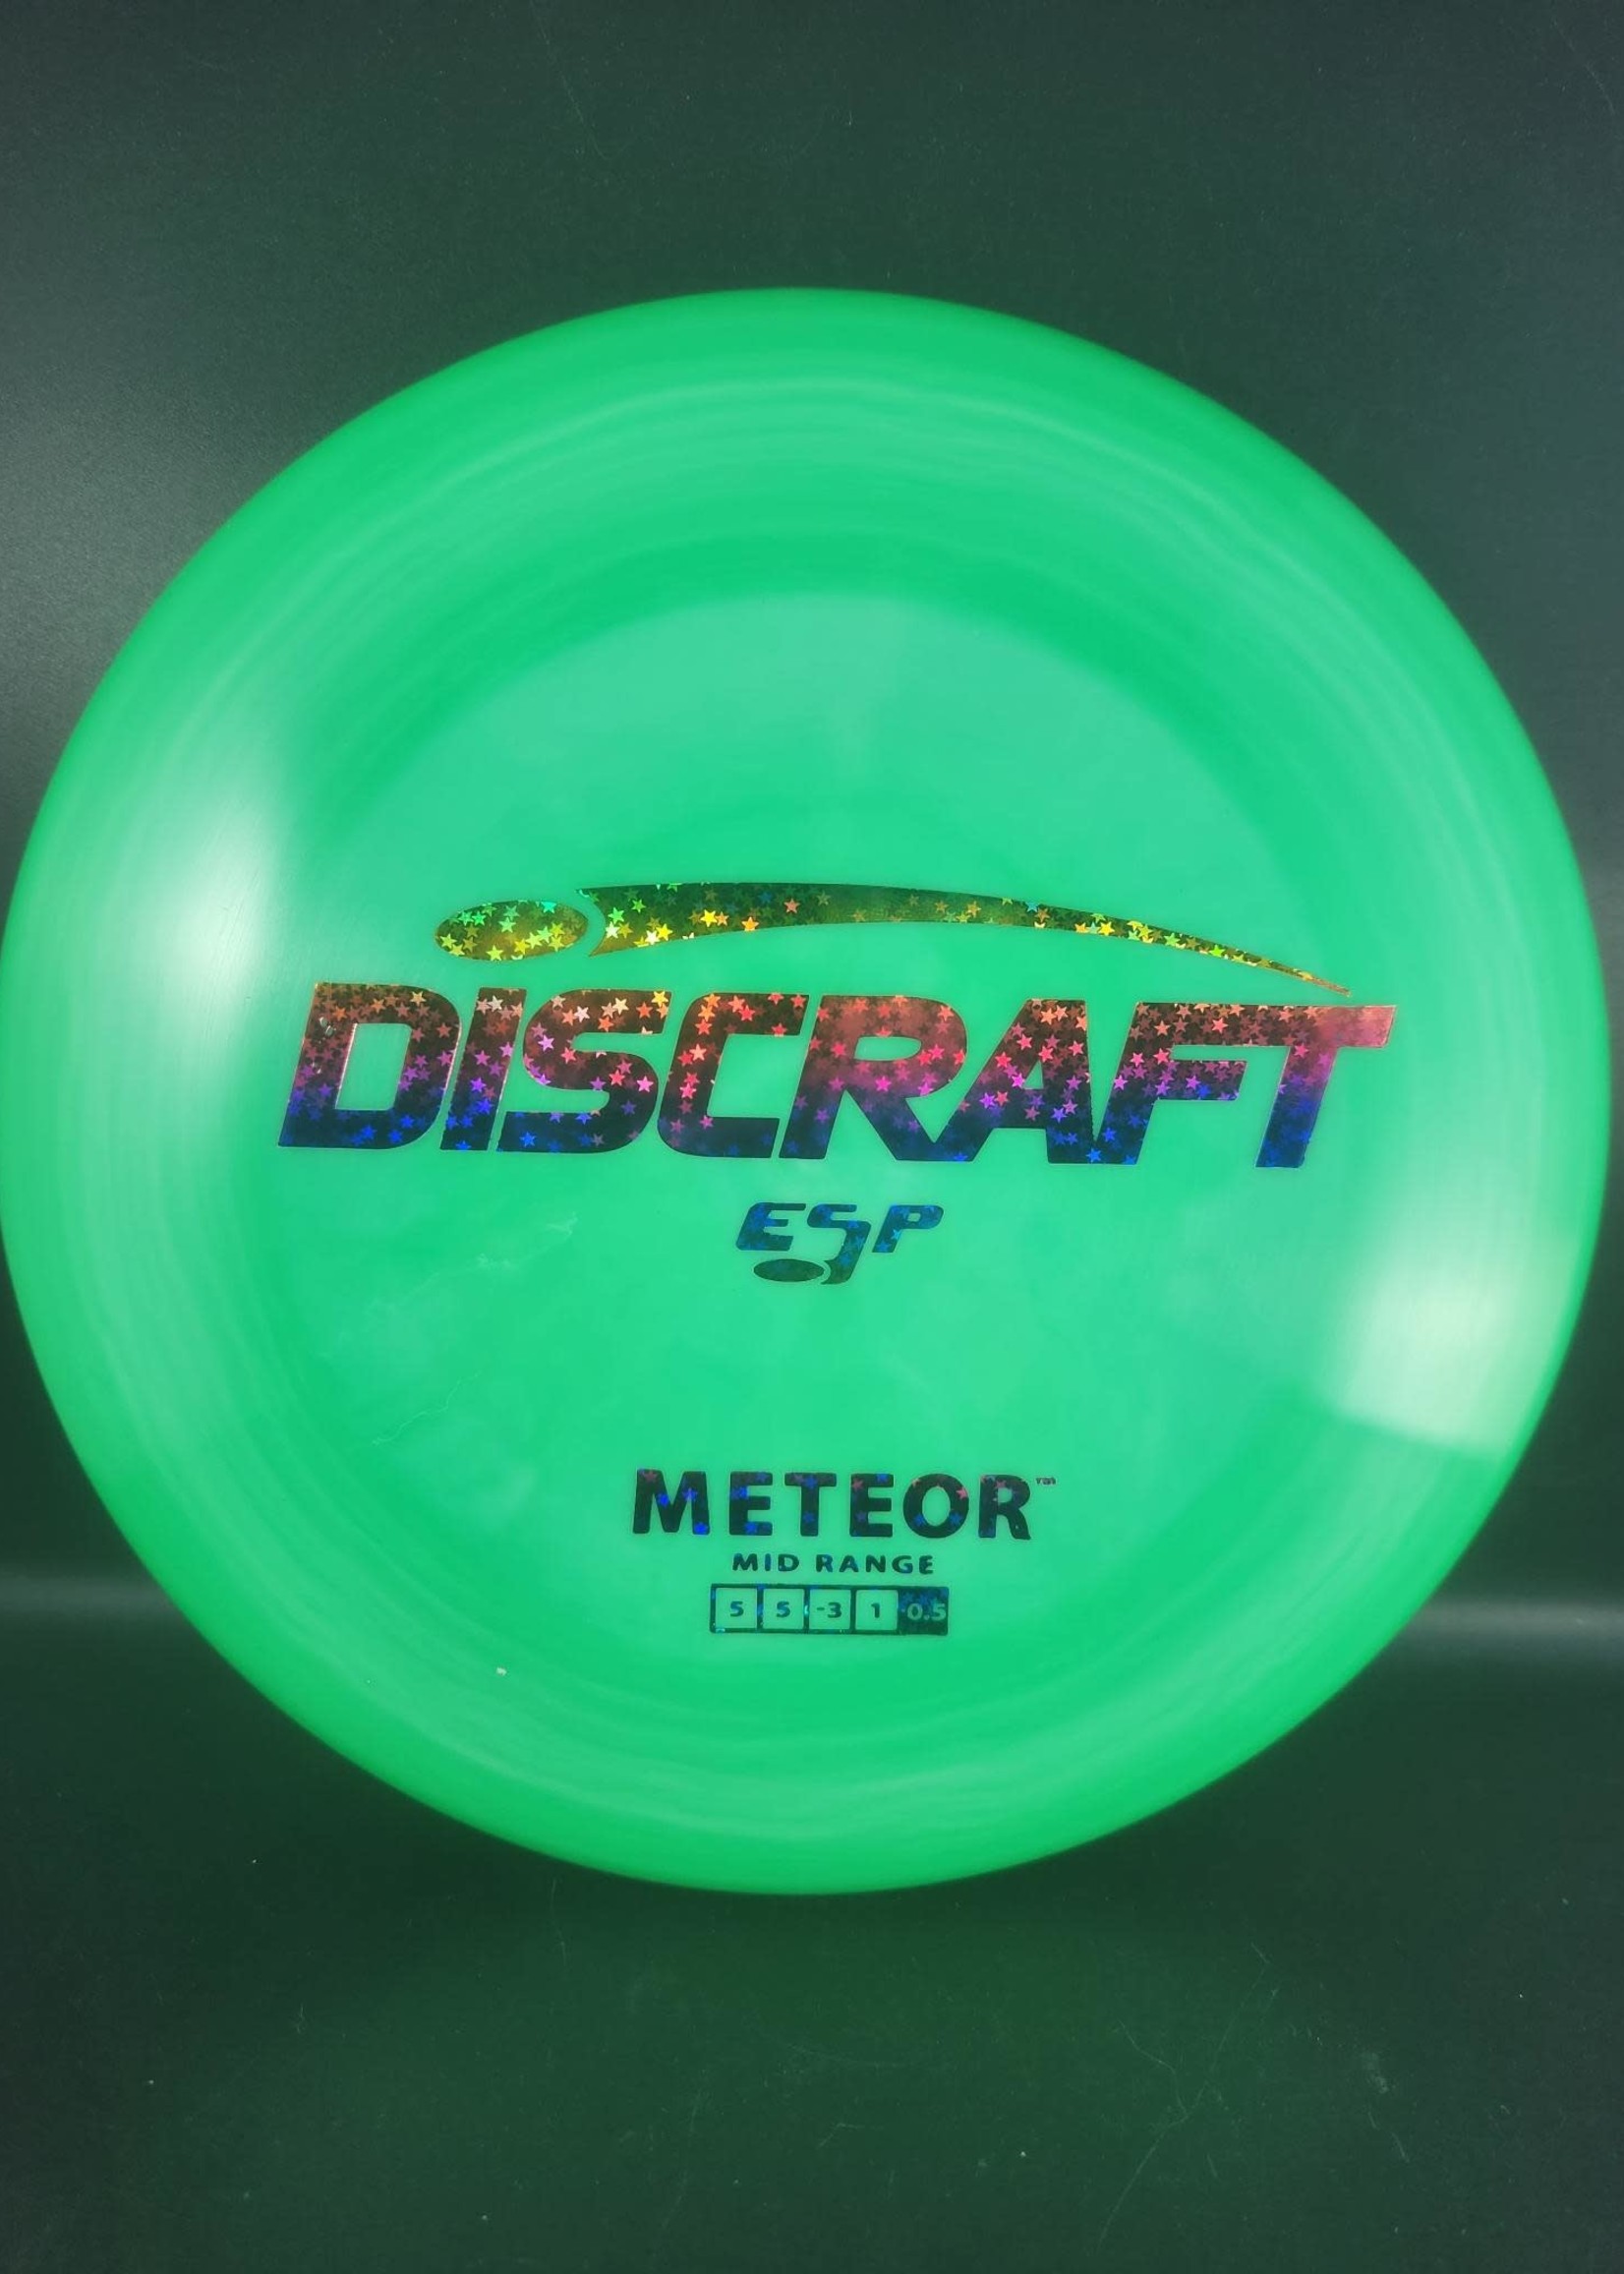 Discraft Discraft ESP Meteor